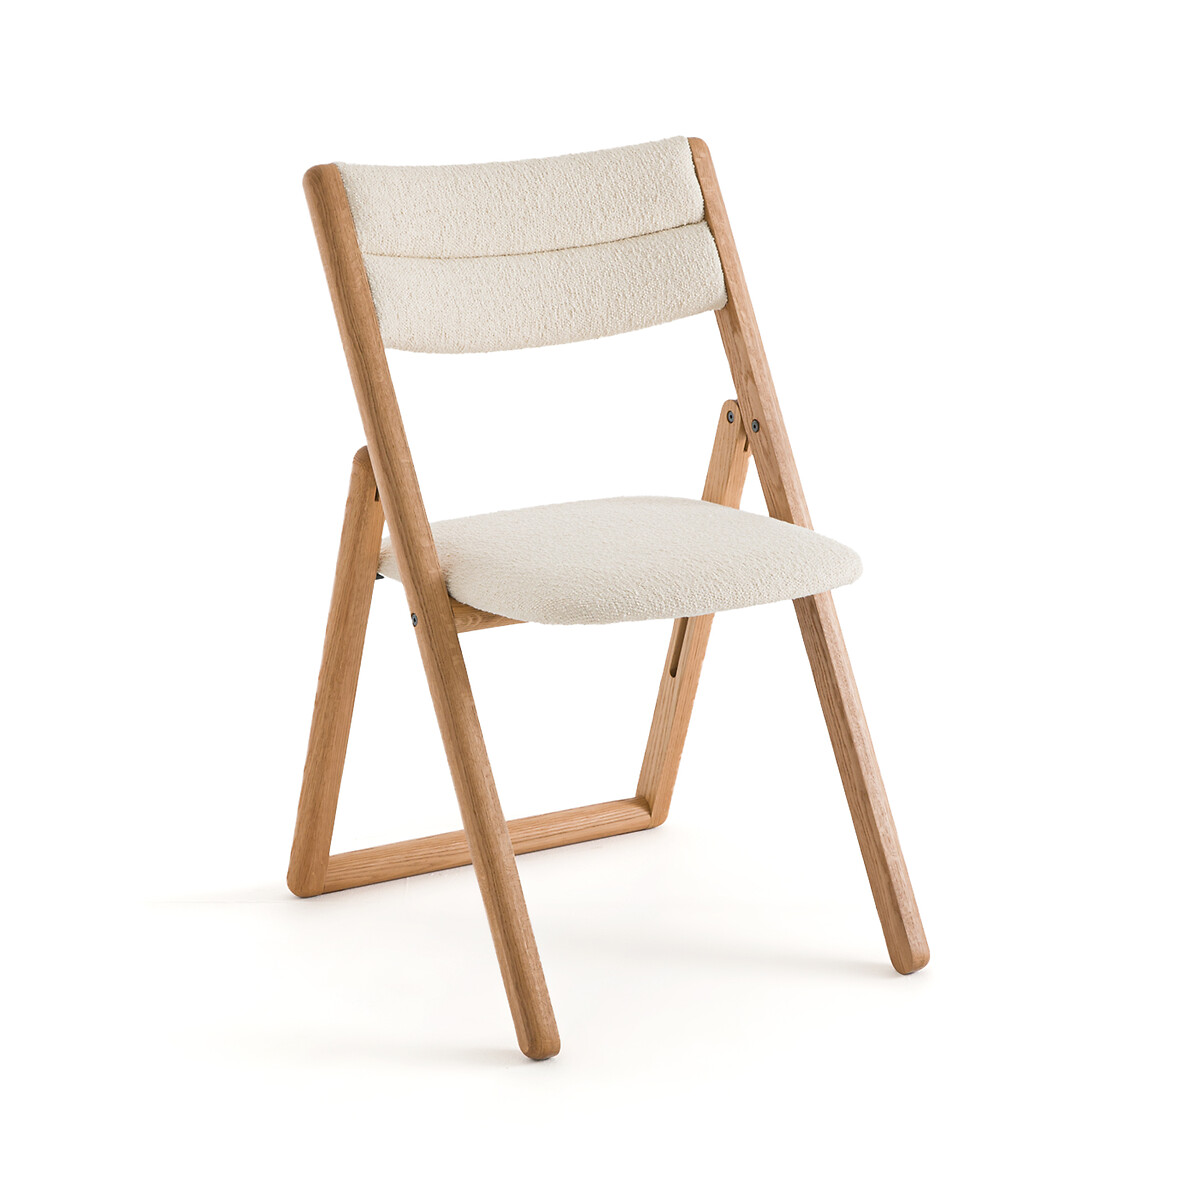 Стул складной из дуба Camminata дизайн Э Галлина единый размер бежевый стул marais дизайн э галлина единый размер каштановый